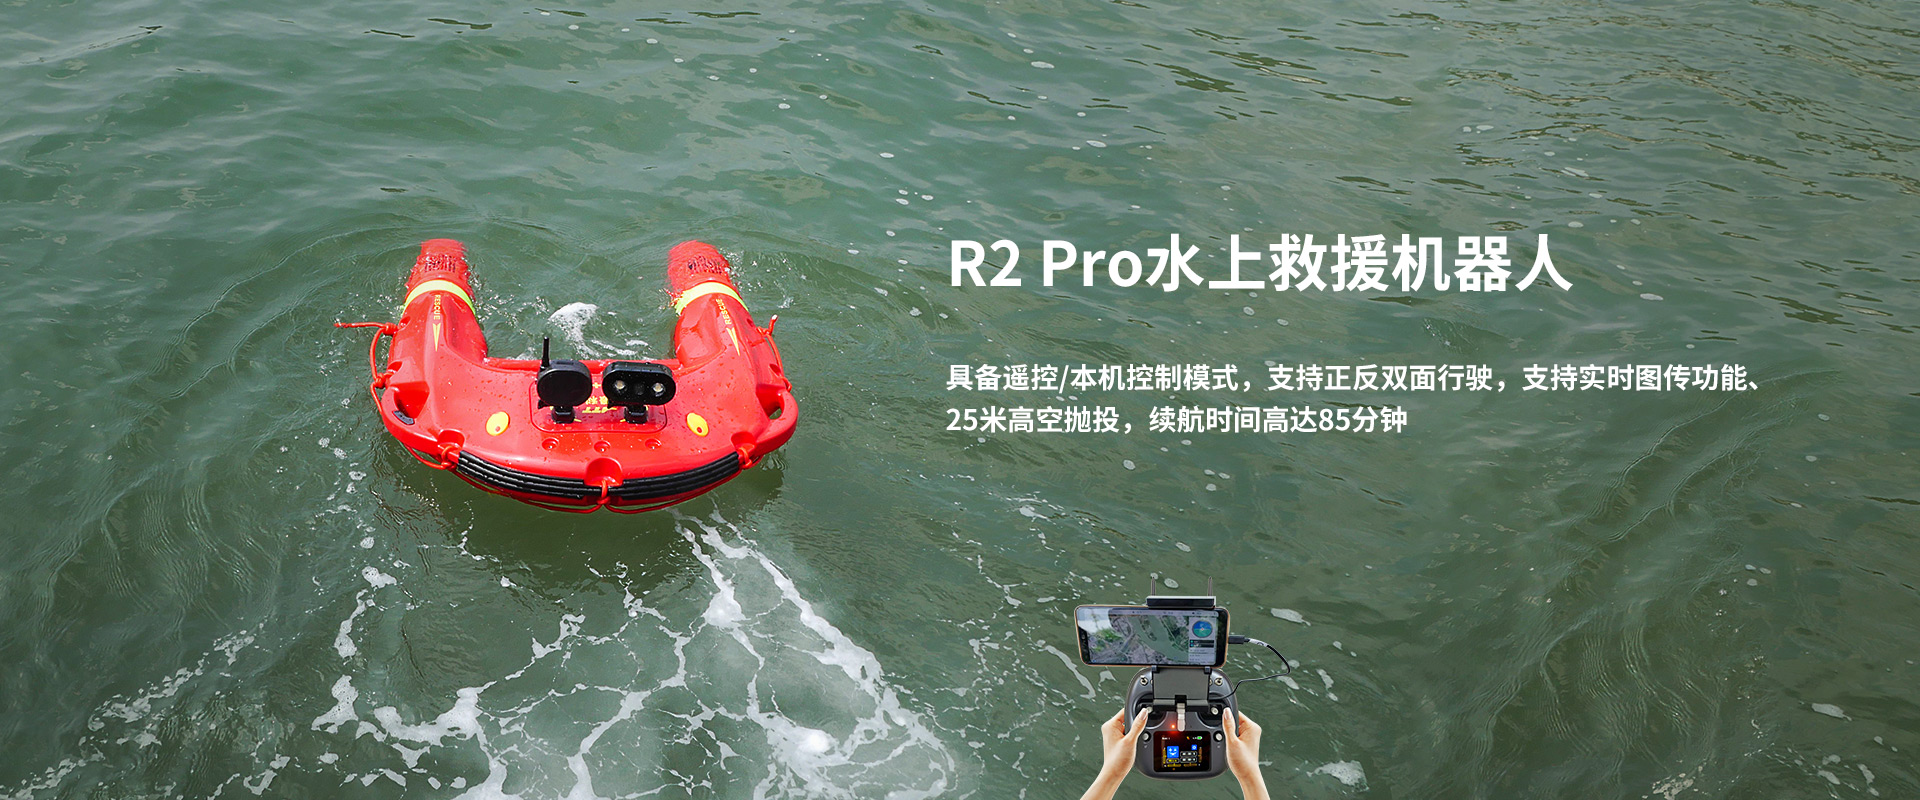 R2 Pro水上救援机器人